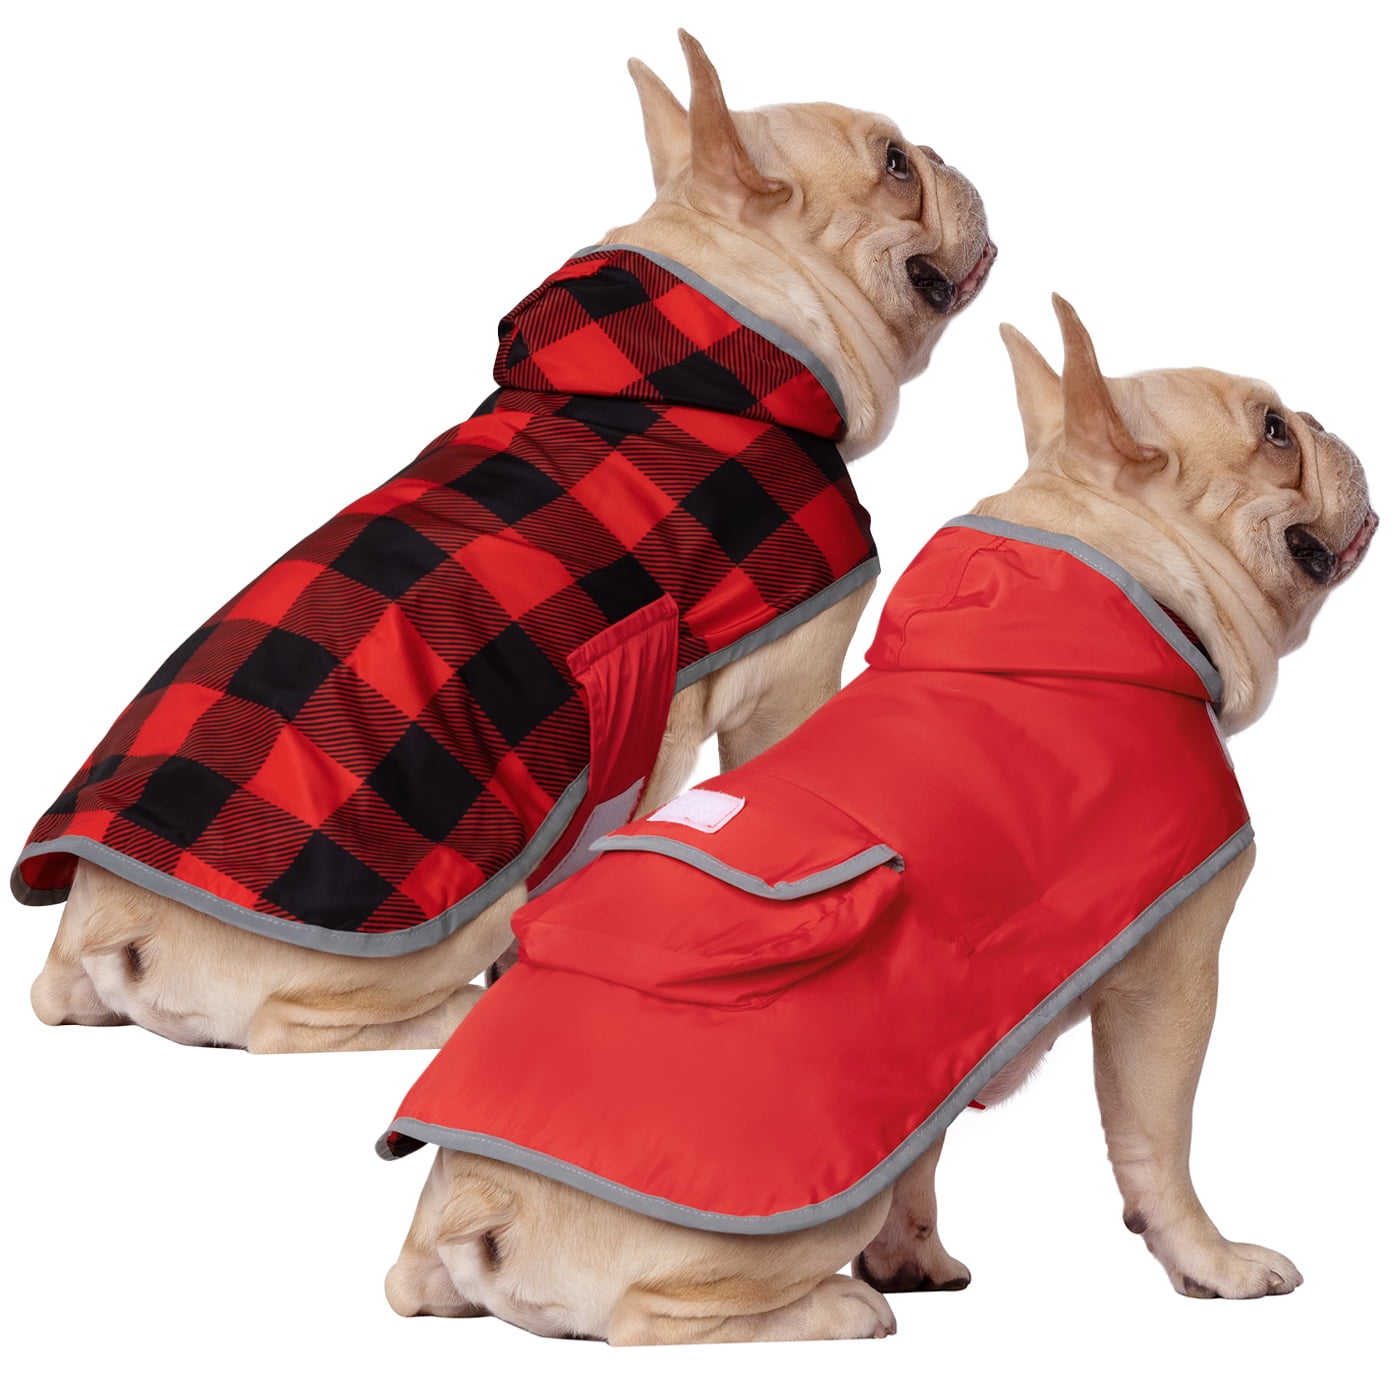 HDE Reversible Dog Raincoat Hooded Slicker Poncho Rain Coat Jacket for Small Medium Large Dogs Buffalo Plaid/Red, M